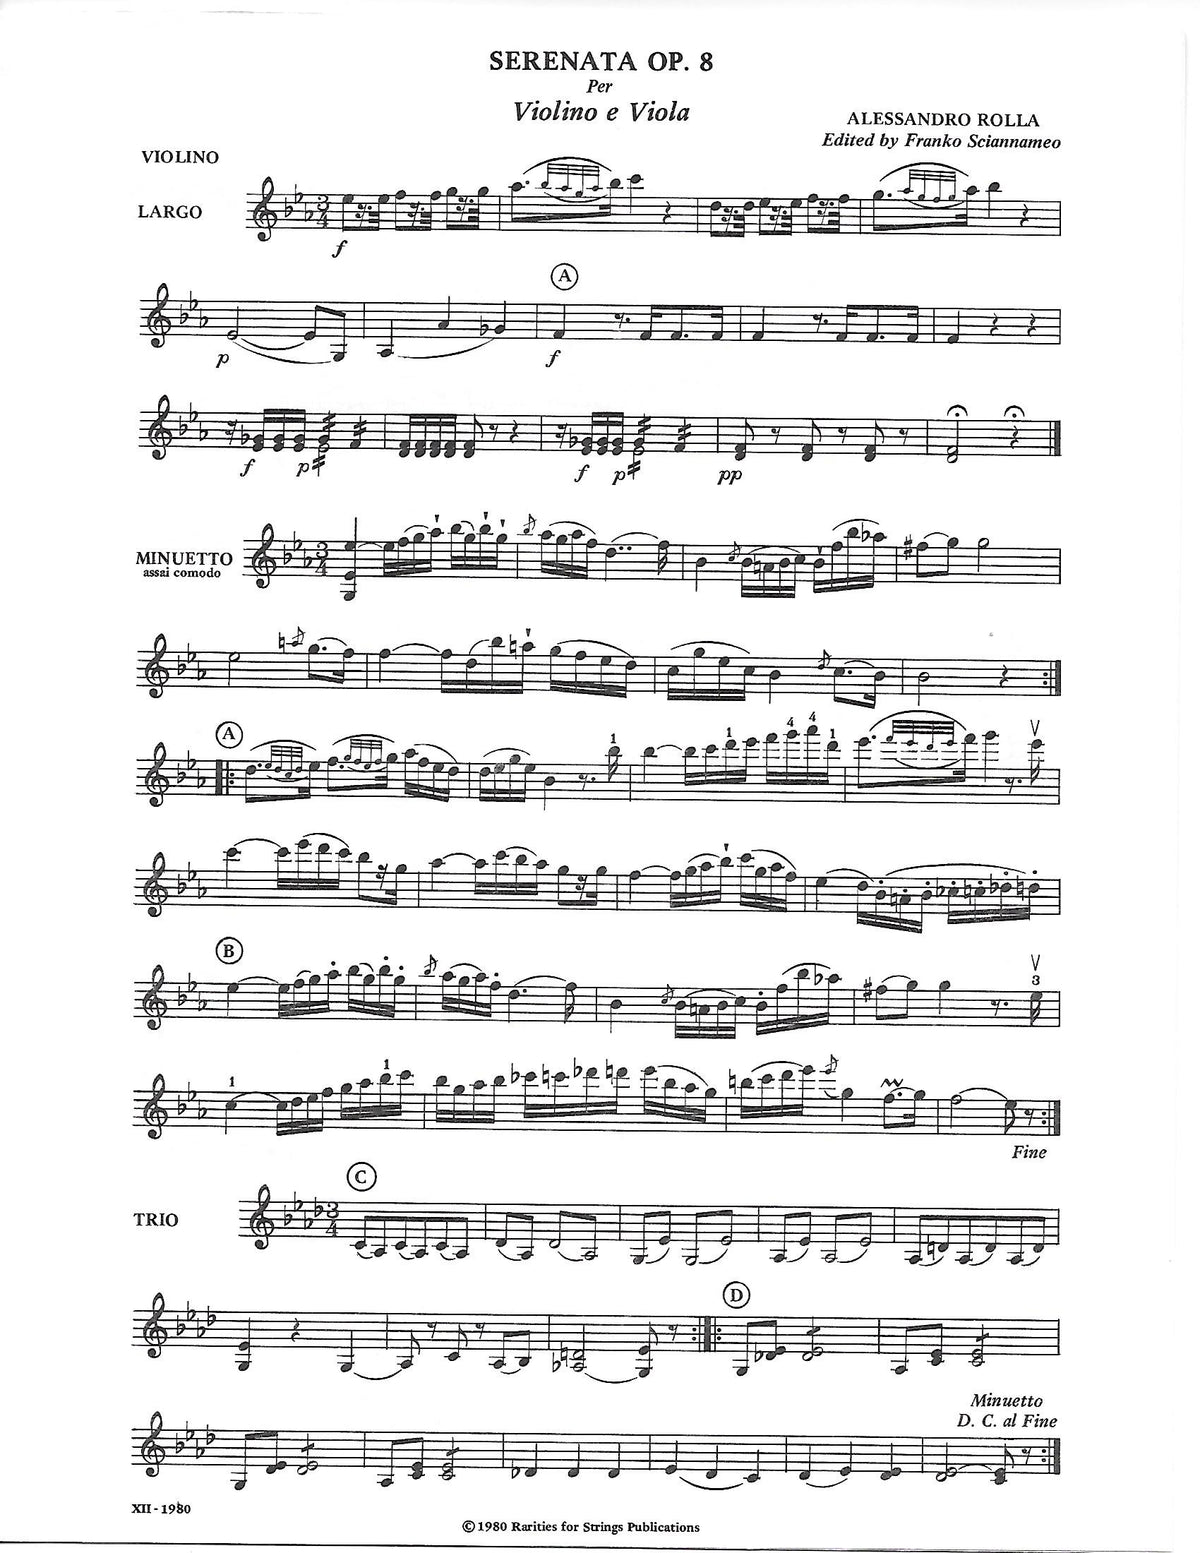 Rolla, Alessandro (Sciannameo) Serenata Op. 8, No. 1 for Violin & Viola